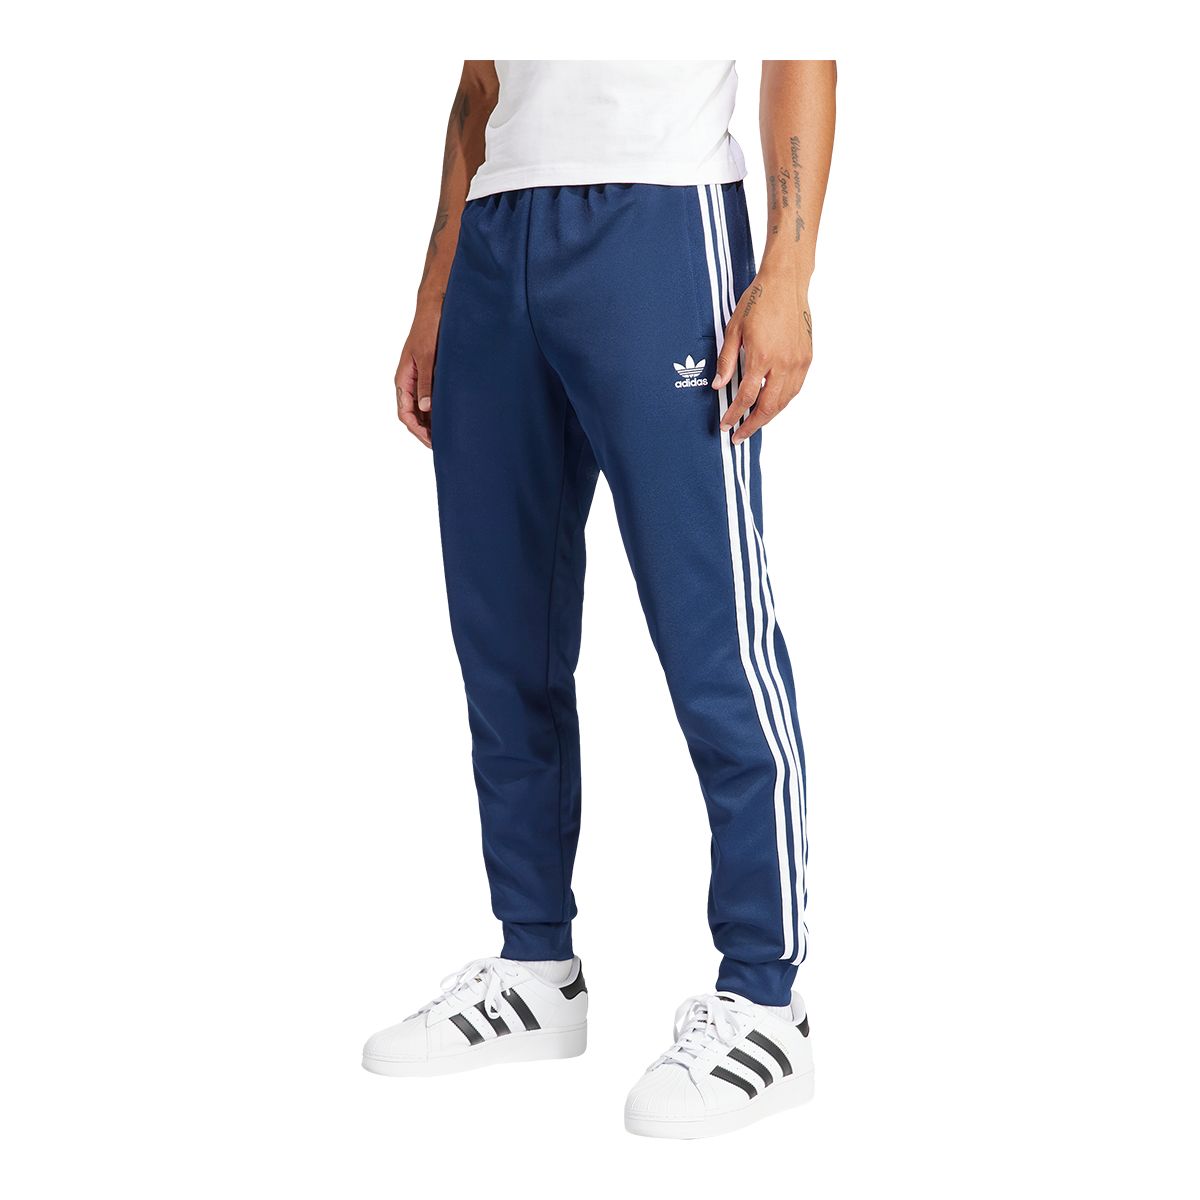 Image of adidas Originals Men's Superstar Track Pants